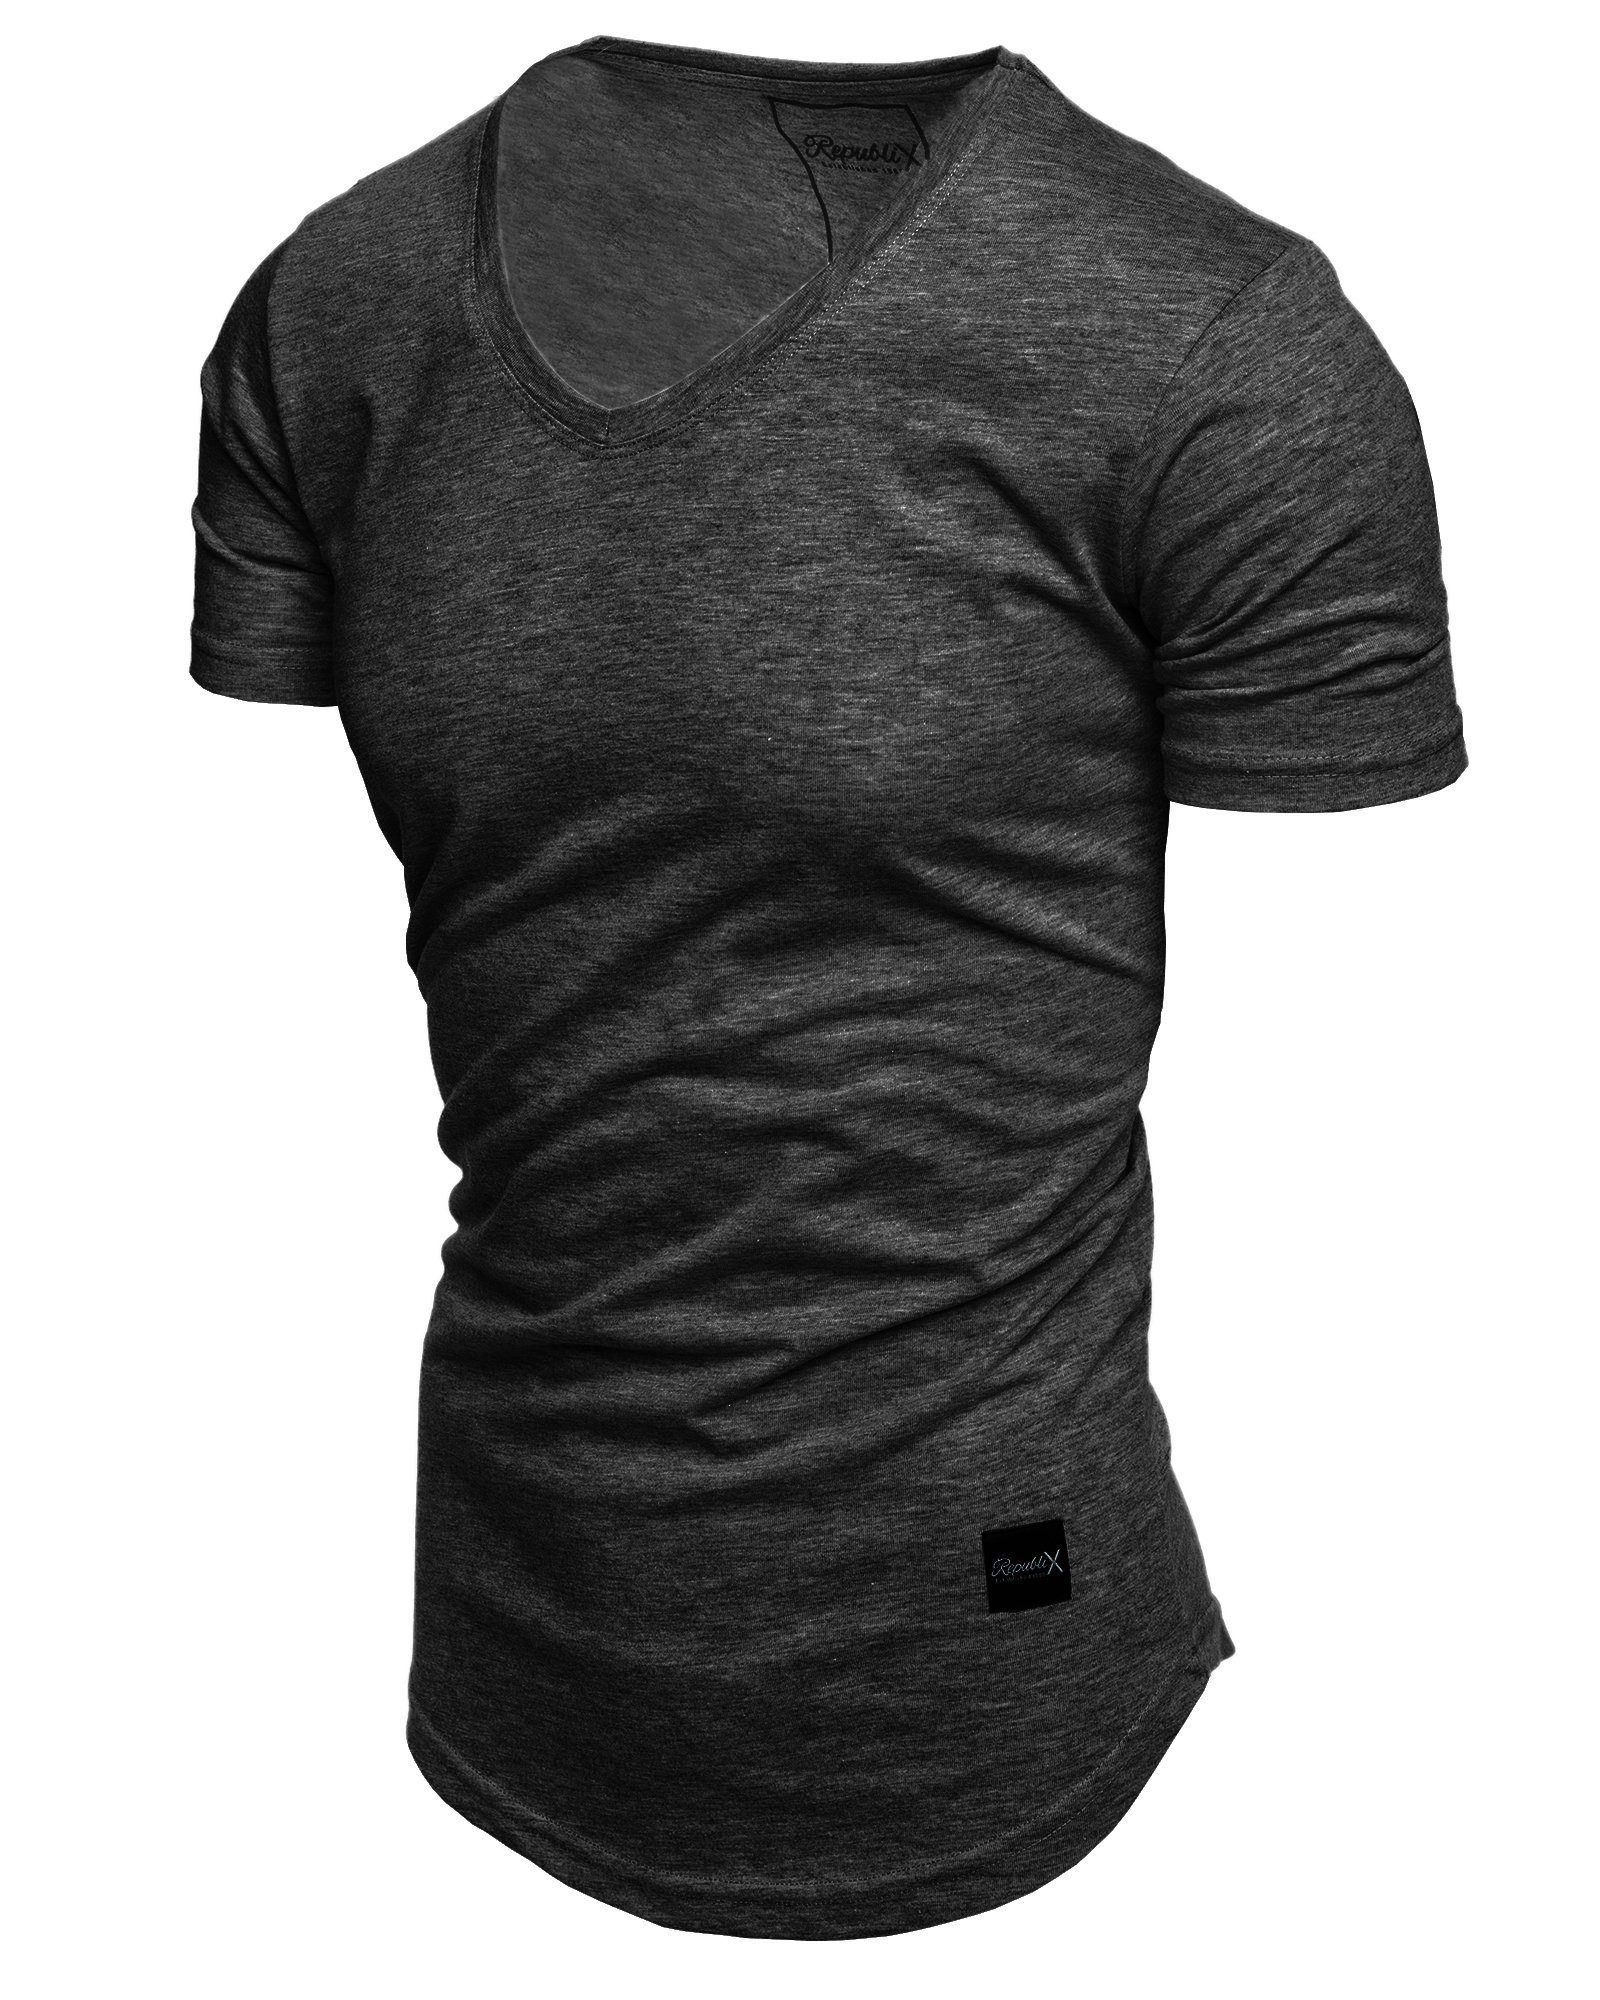 REPUBLIX Anthrazit Melange Shirt T-Shirt BRANDON mit V-Ausschnitt Oversize Basic Herren